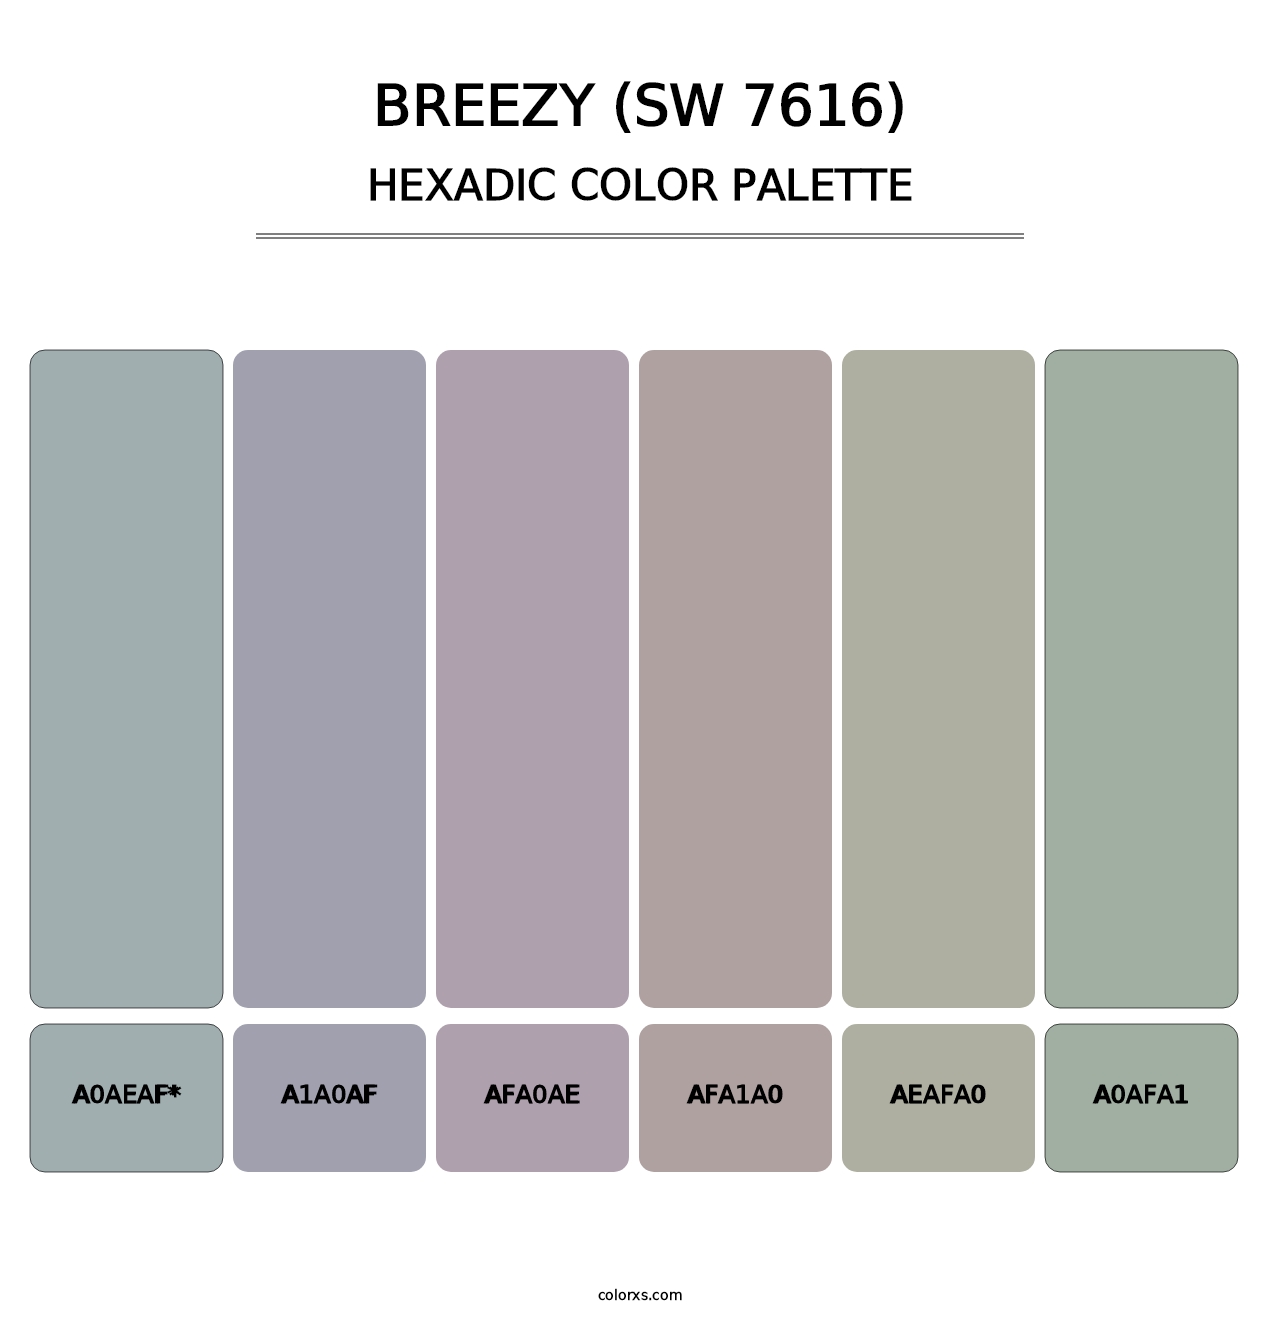 Breezy (SW 7616) - Hexadic Color Palette